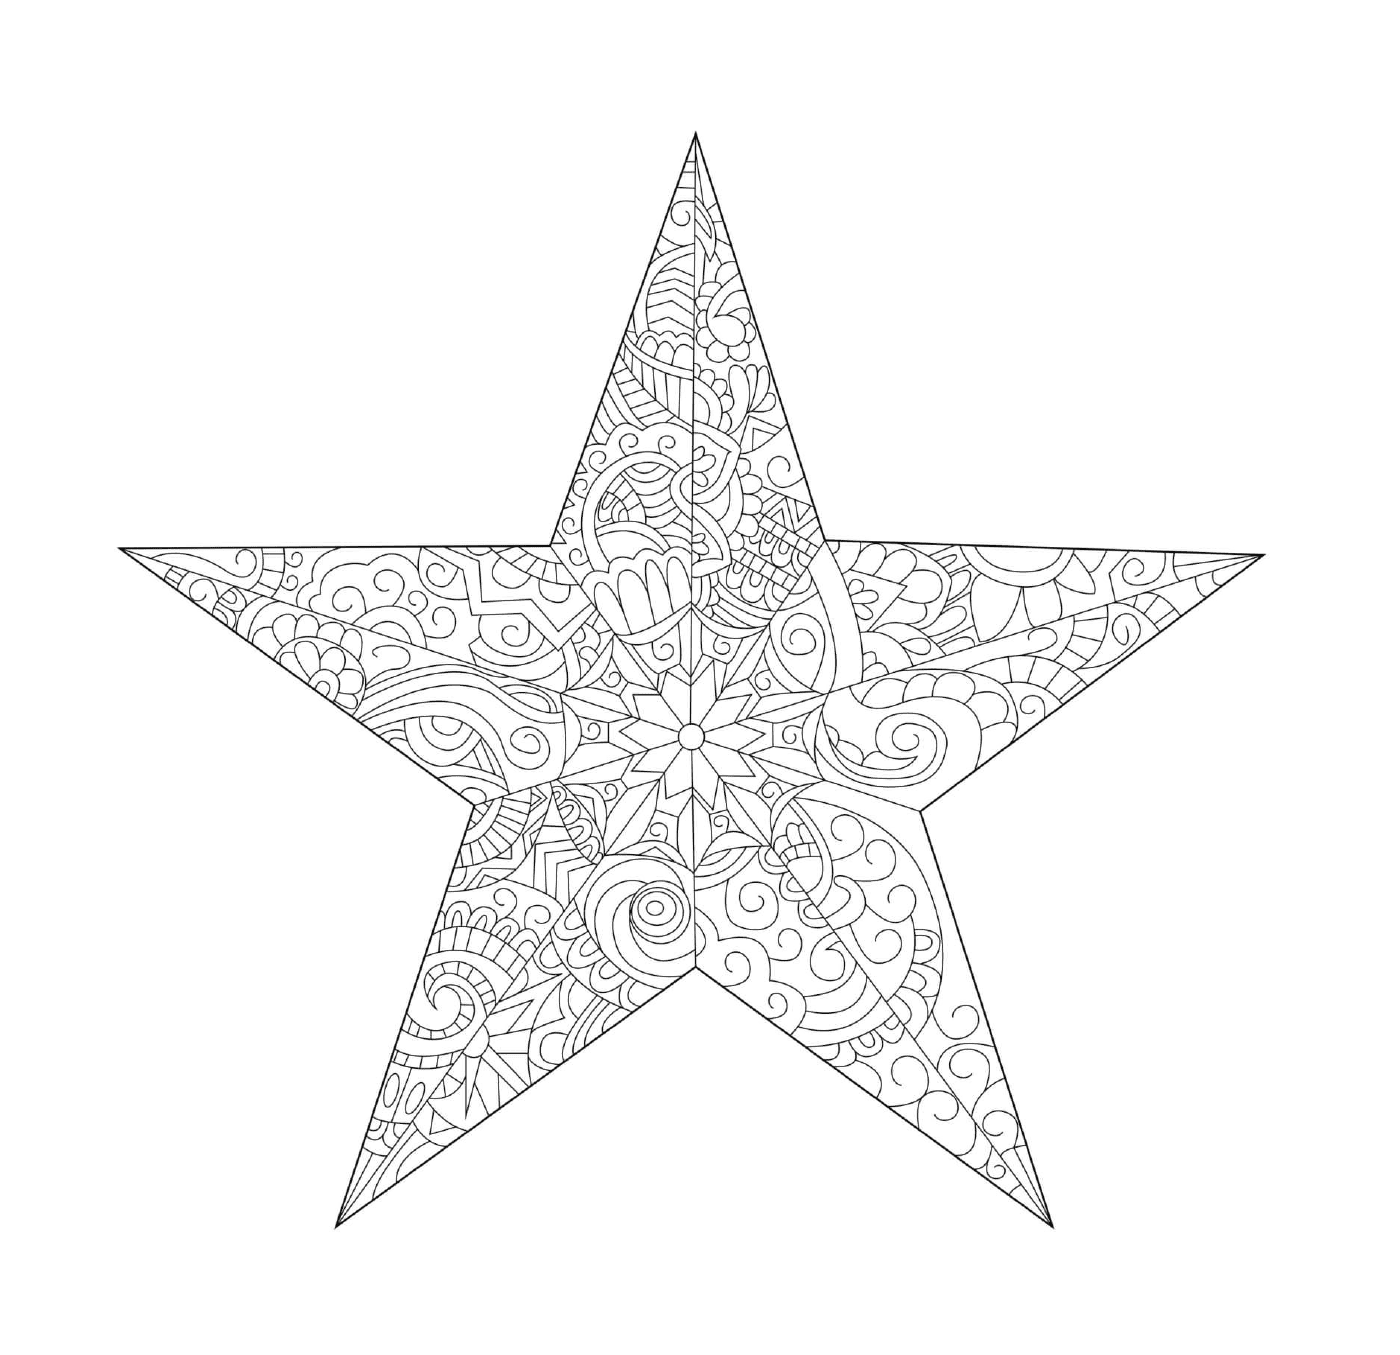  A decorative star 